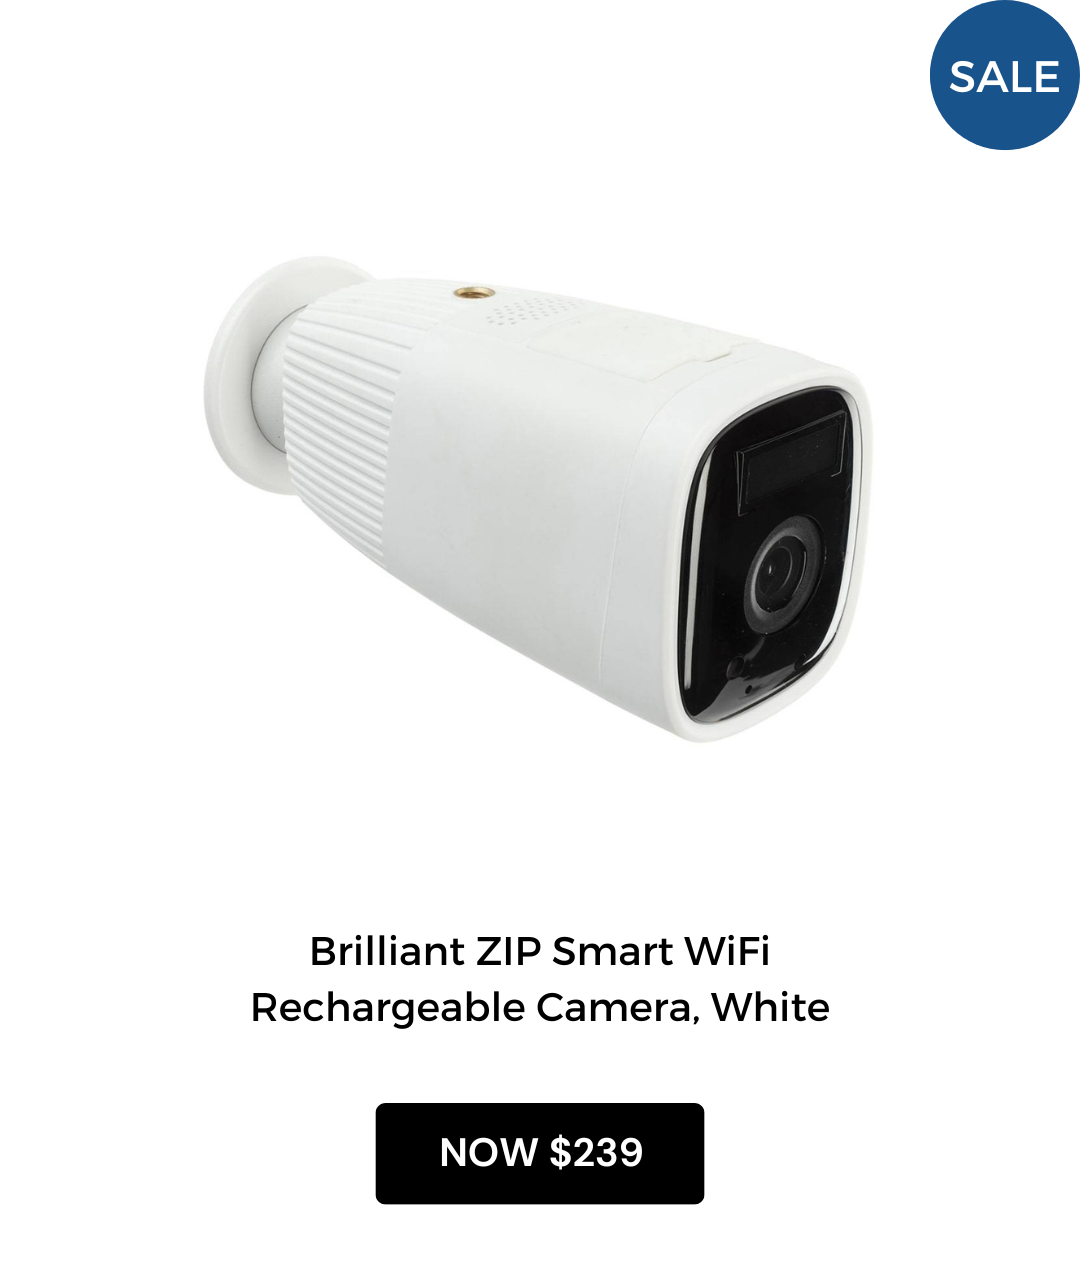 Brilliant ZIP Smart WiFi Rechargeable Camera, White